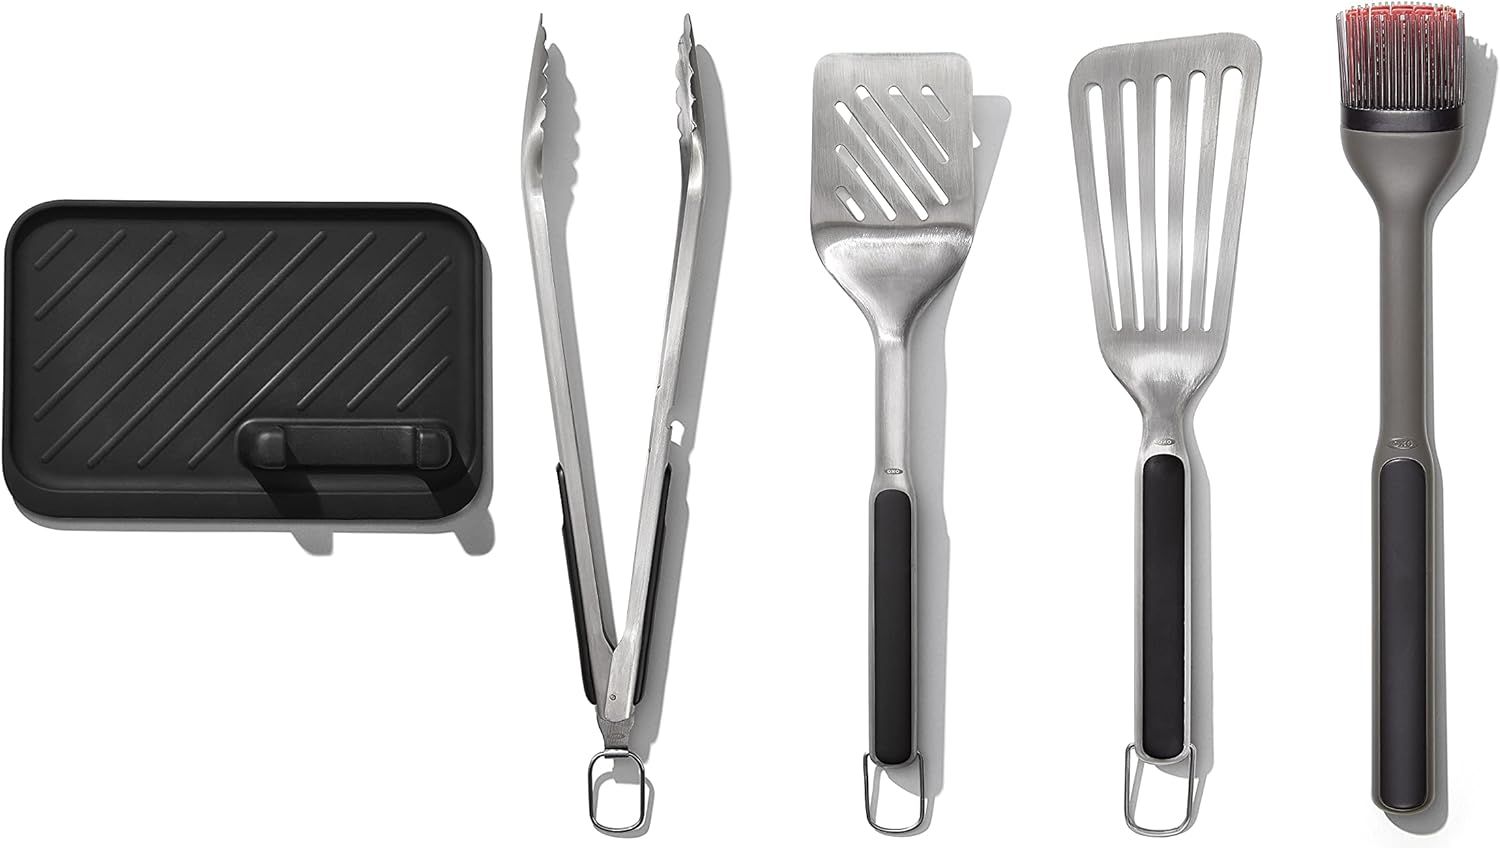 OXO Good Grips Grilling Tools, 5-Piece Set, Black | Amazon (US)